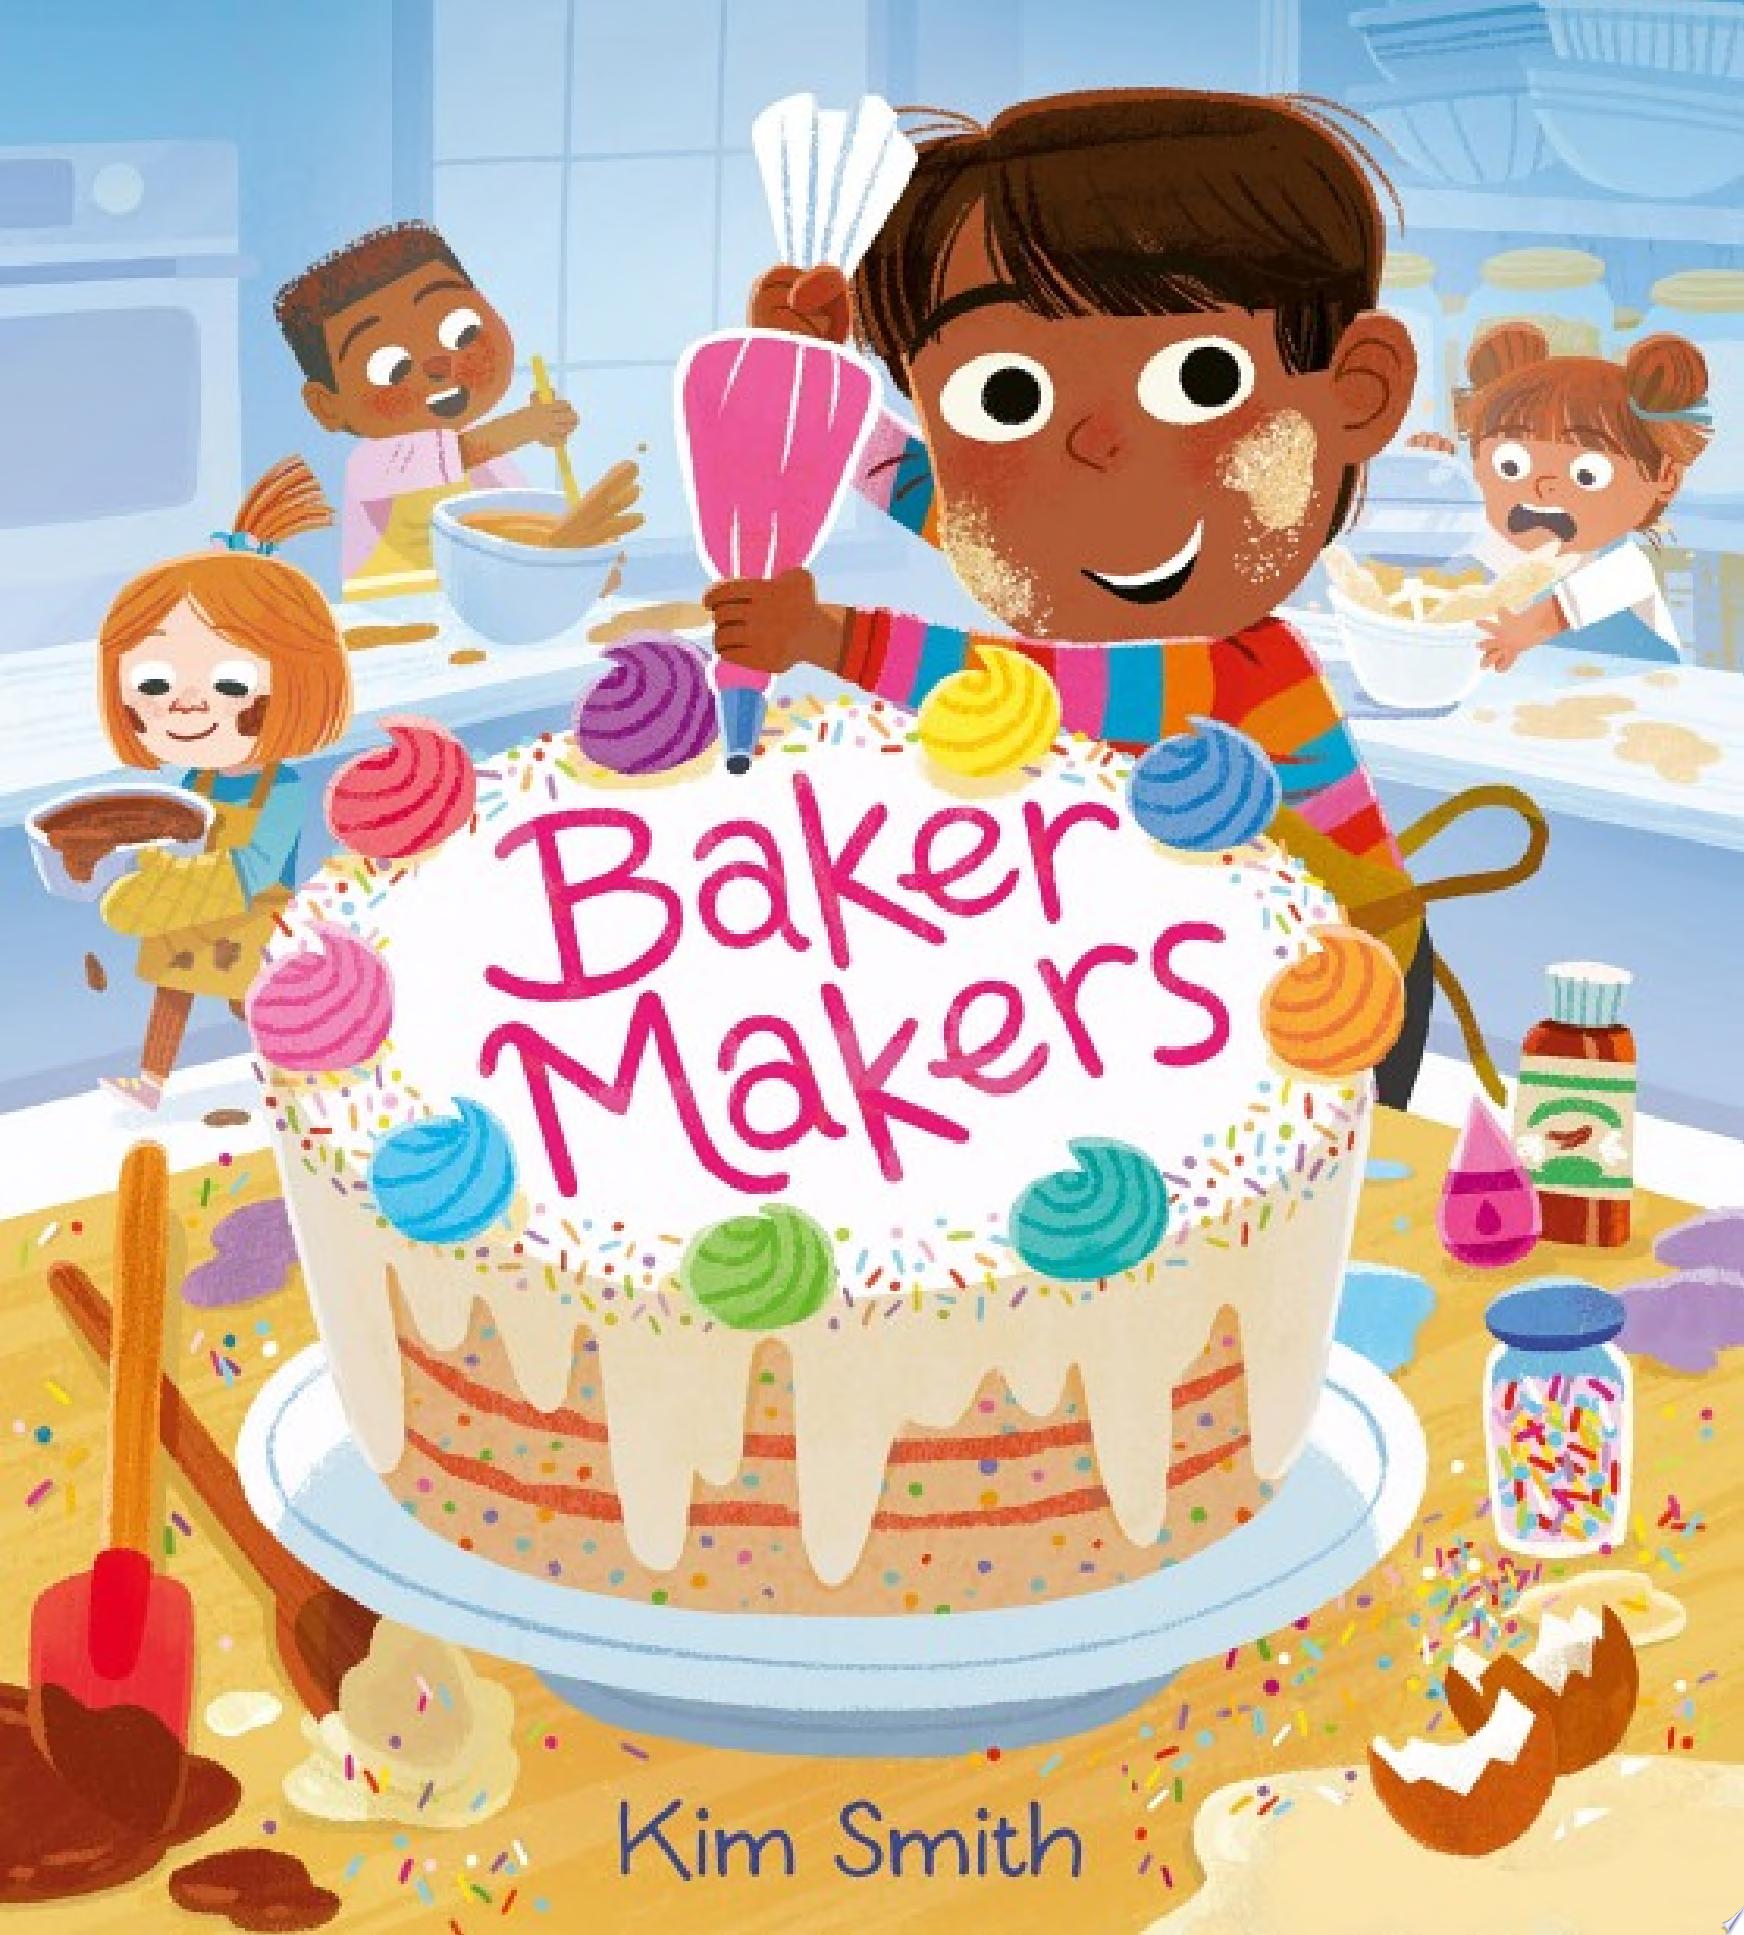 Image for "Baker Makers"